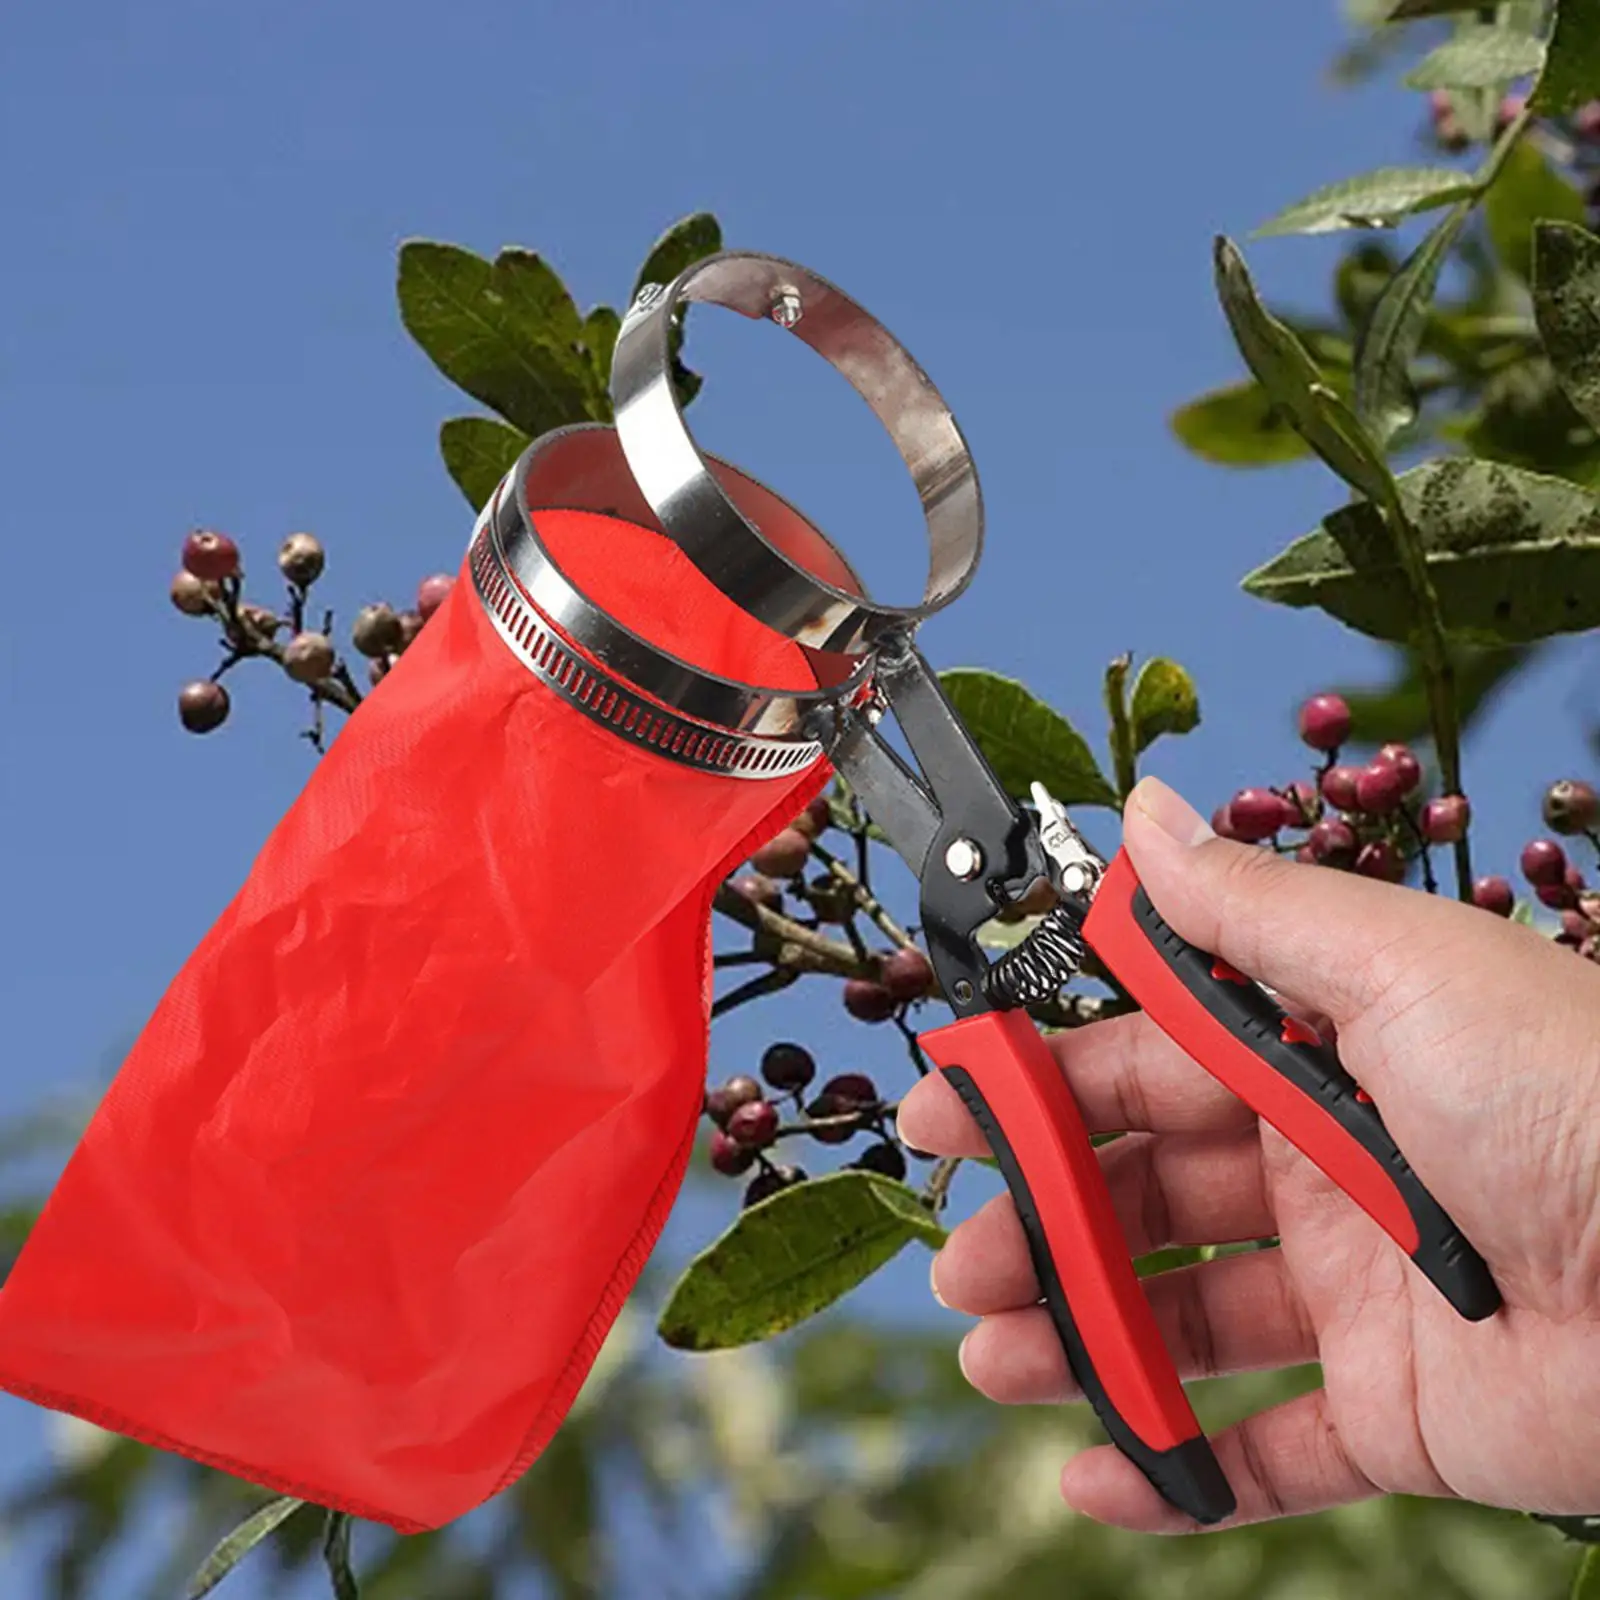 Garden Pepper Picker Picking Tool Multipurpose with Storage Bags Pepper Scissors for Fruit Tree Pruning Pears Pepper Vegetables